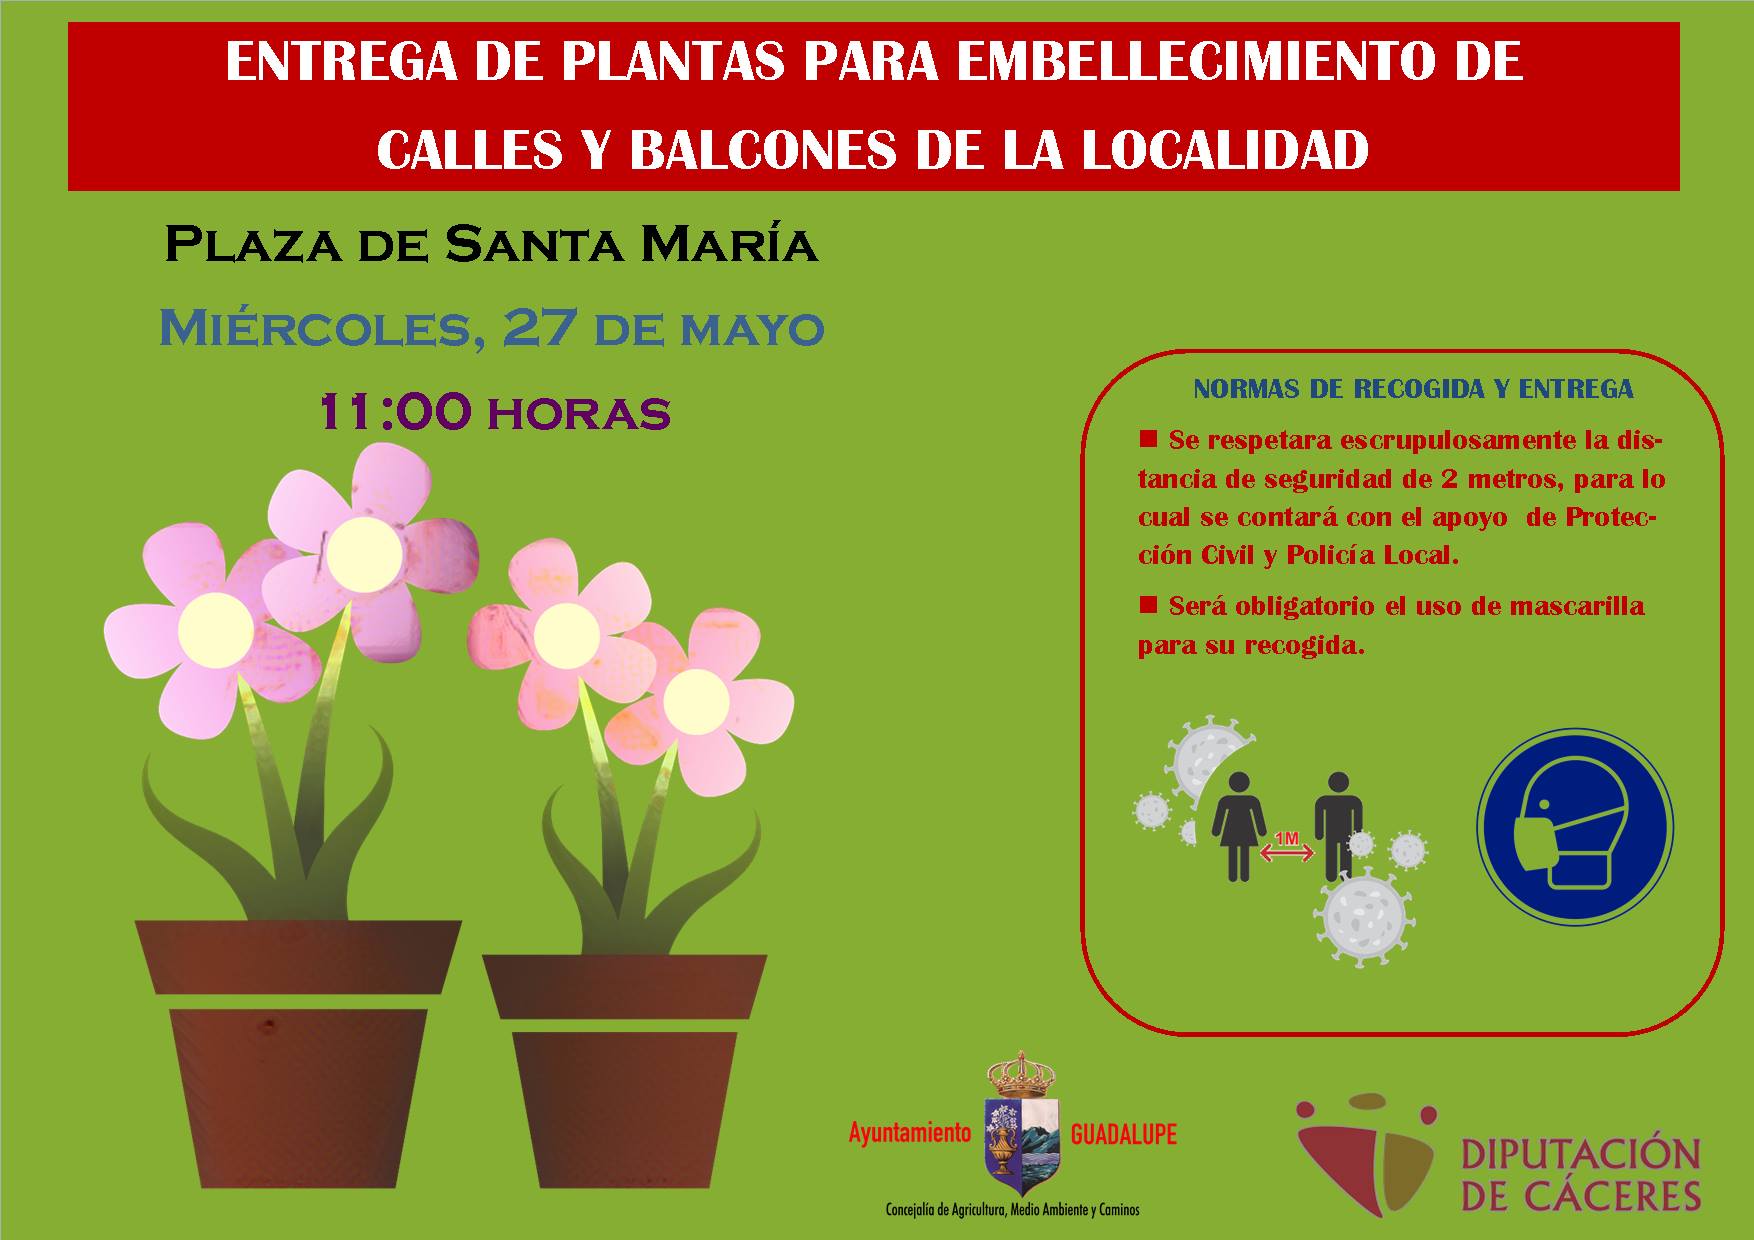 Entrega de plantas para embellecer 2020 - Guadalupe (Cáceres)